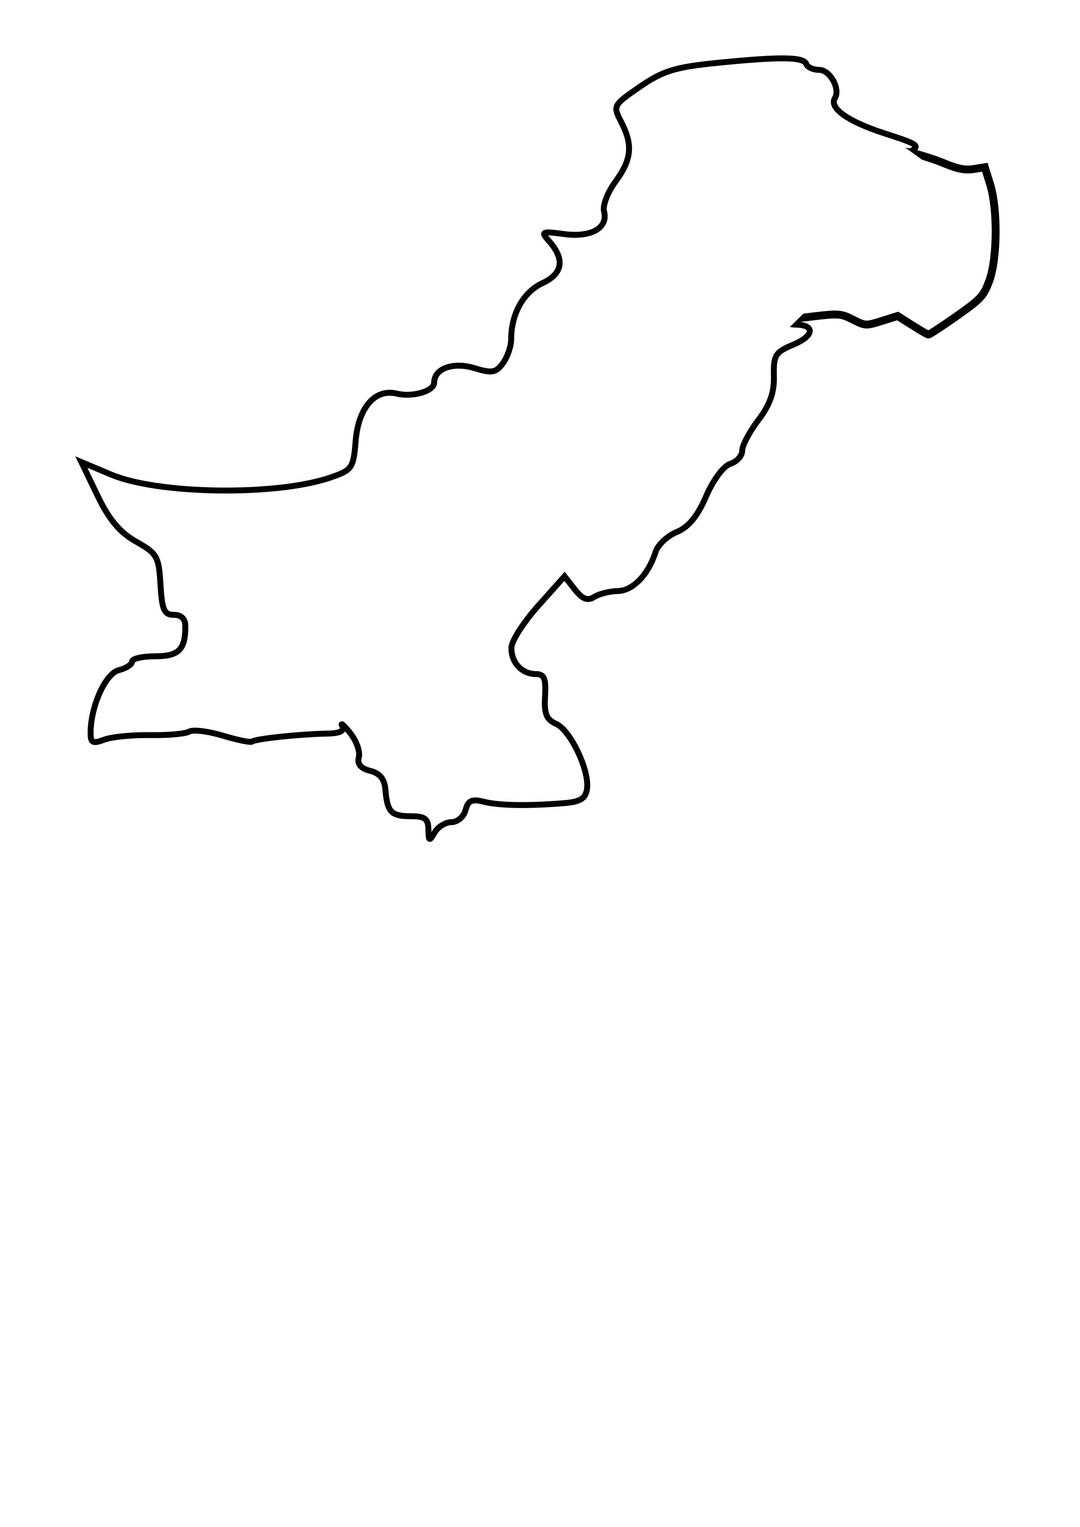 Black outline map of Pakistan png transparent